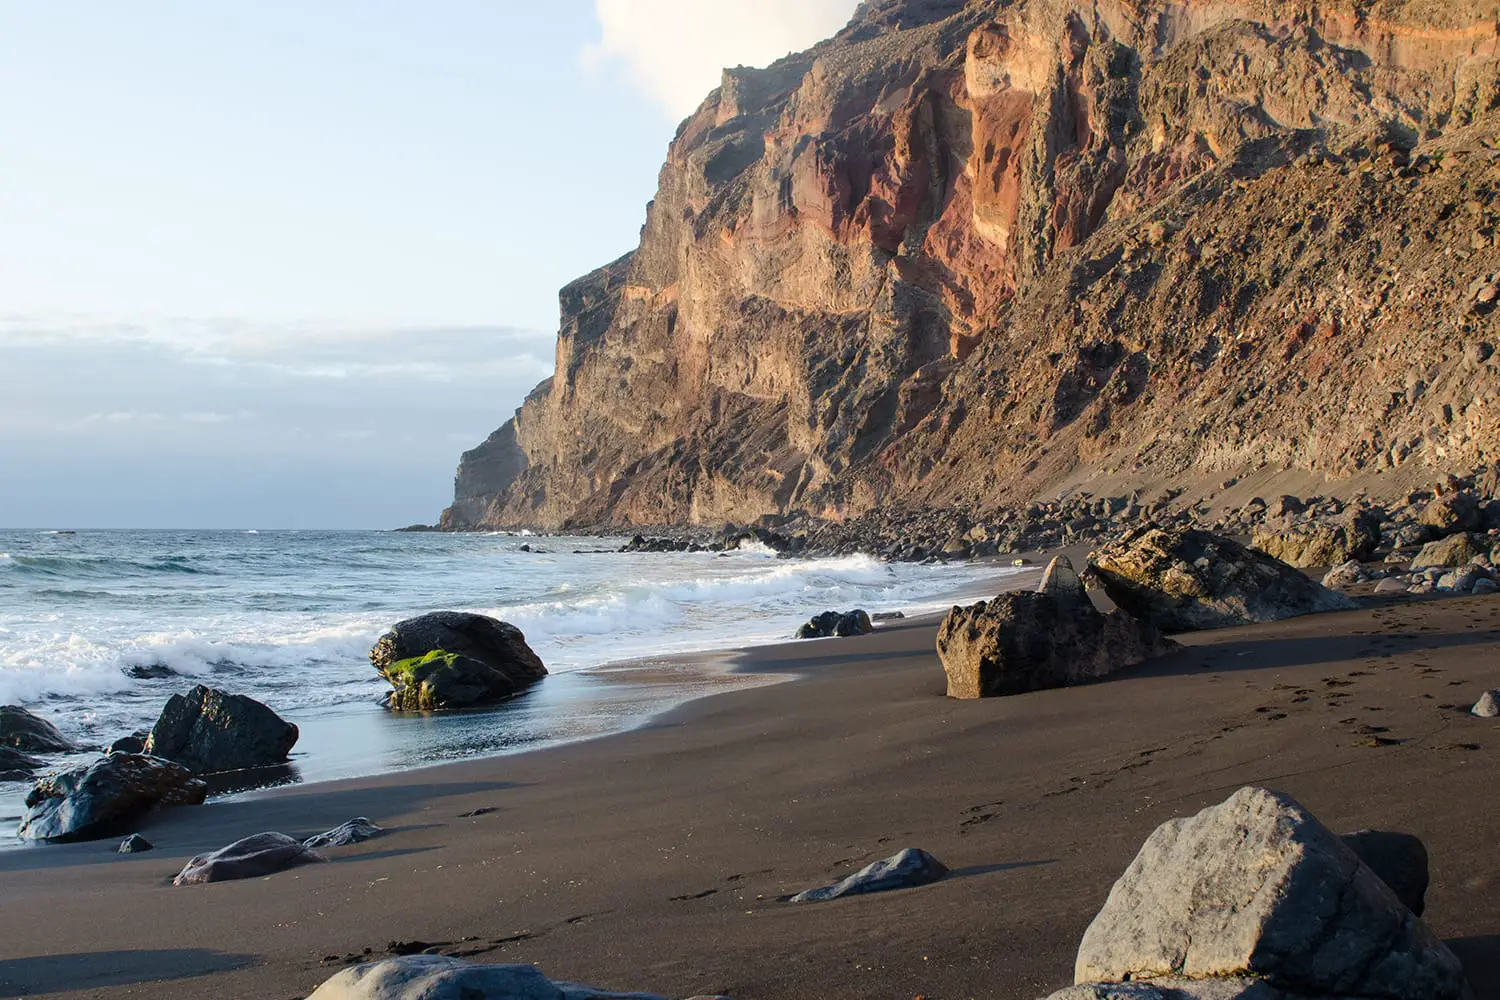 Playa del ingles beach, black sand beach at the atlantic ocean in La Gomera, one of the Canary Islands, Spain